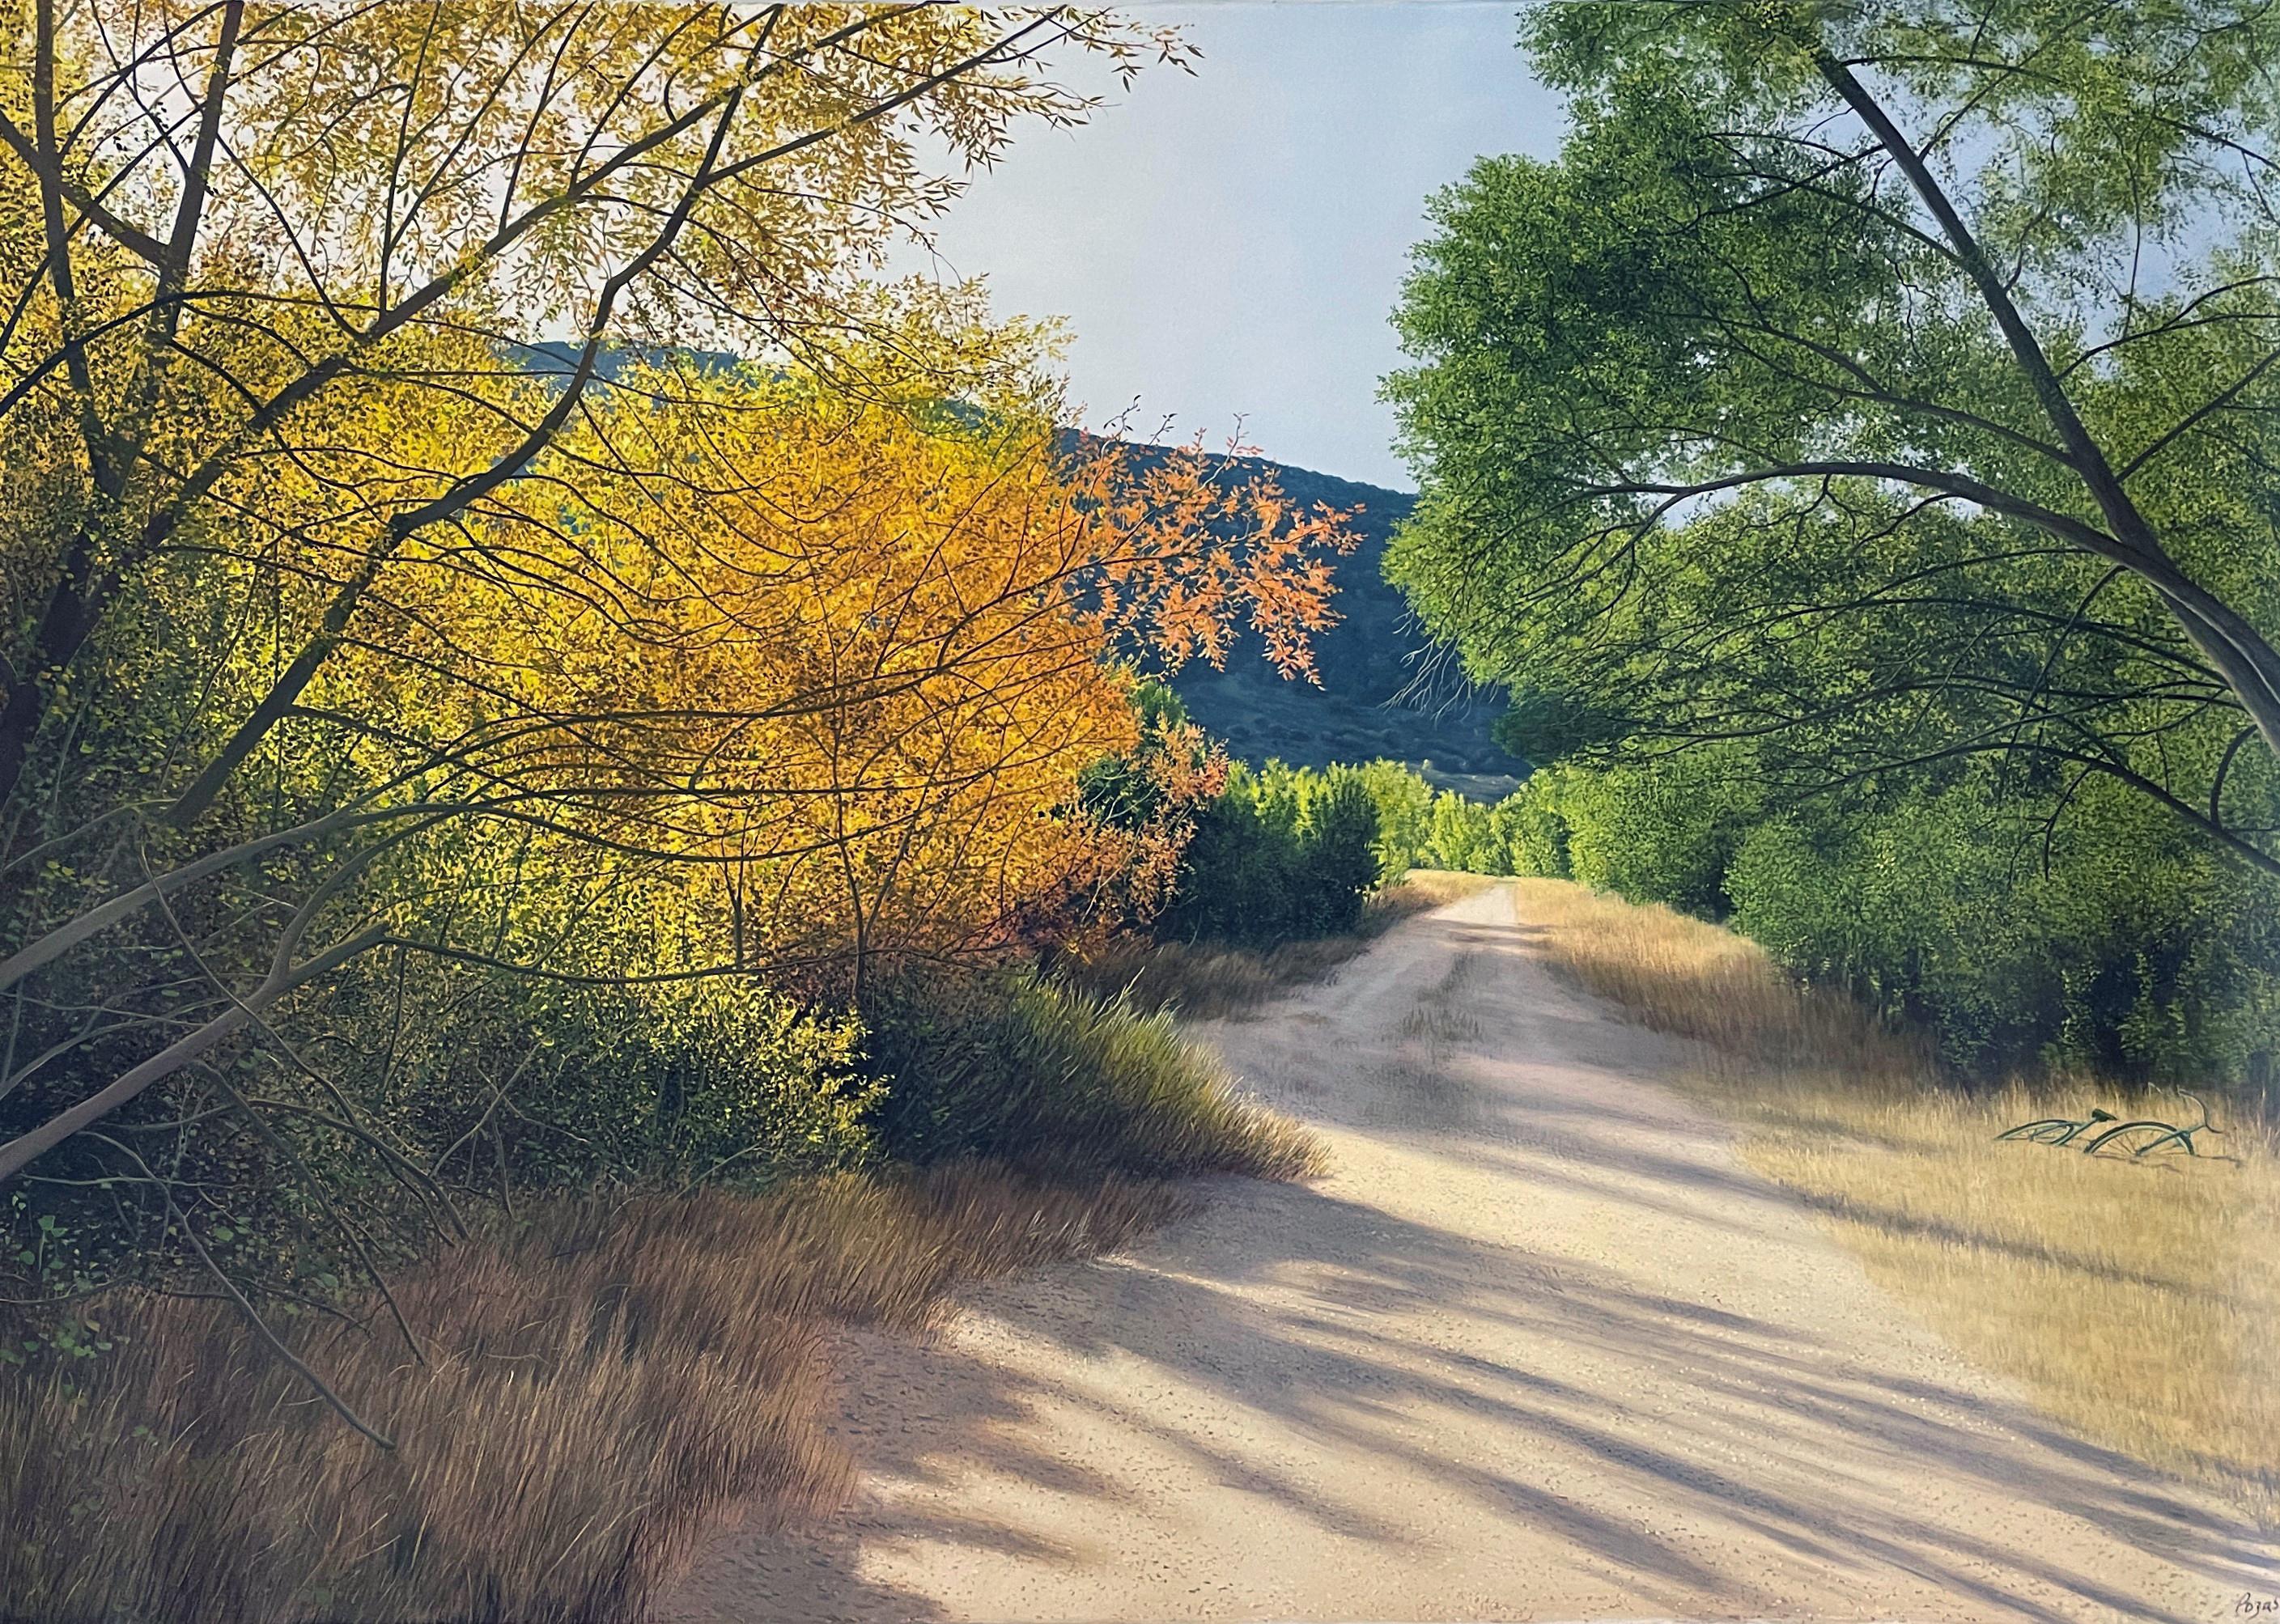 René Monzón Relova “Pozas” Landscape Painting - Light Shadows, Highly Detailed Lush Landscape, Deserted Road, Dappled Sunlight